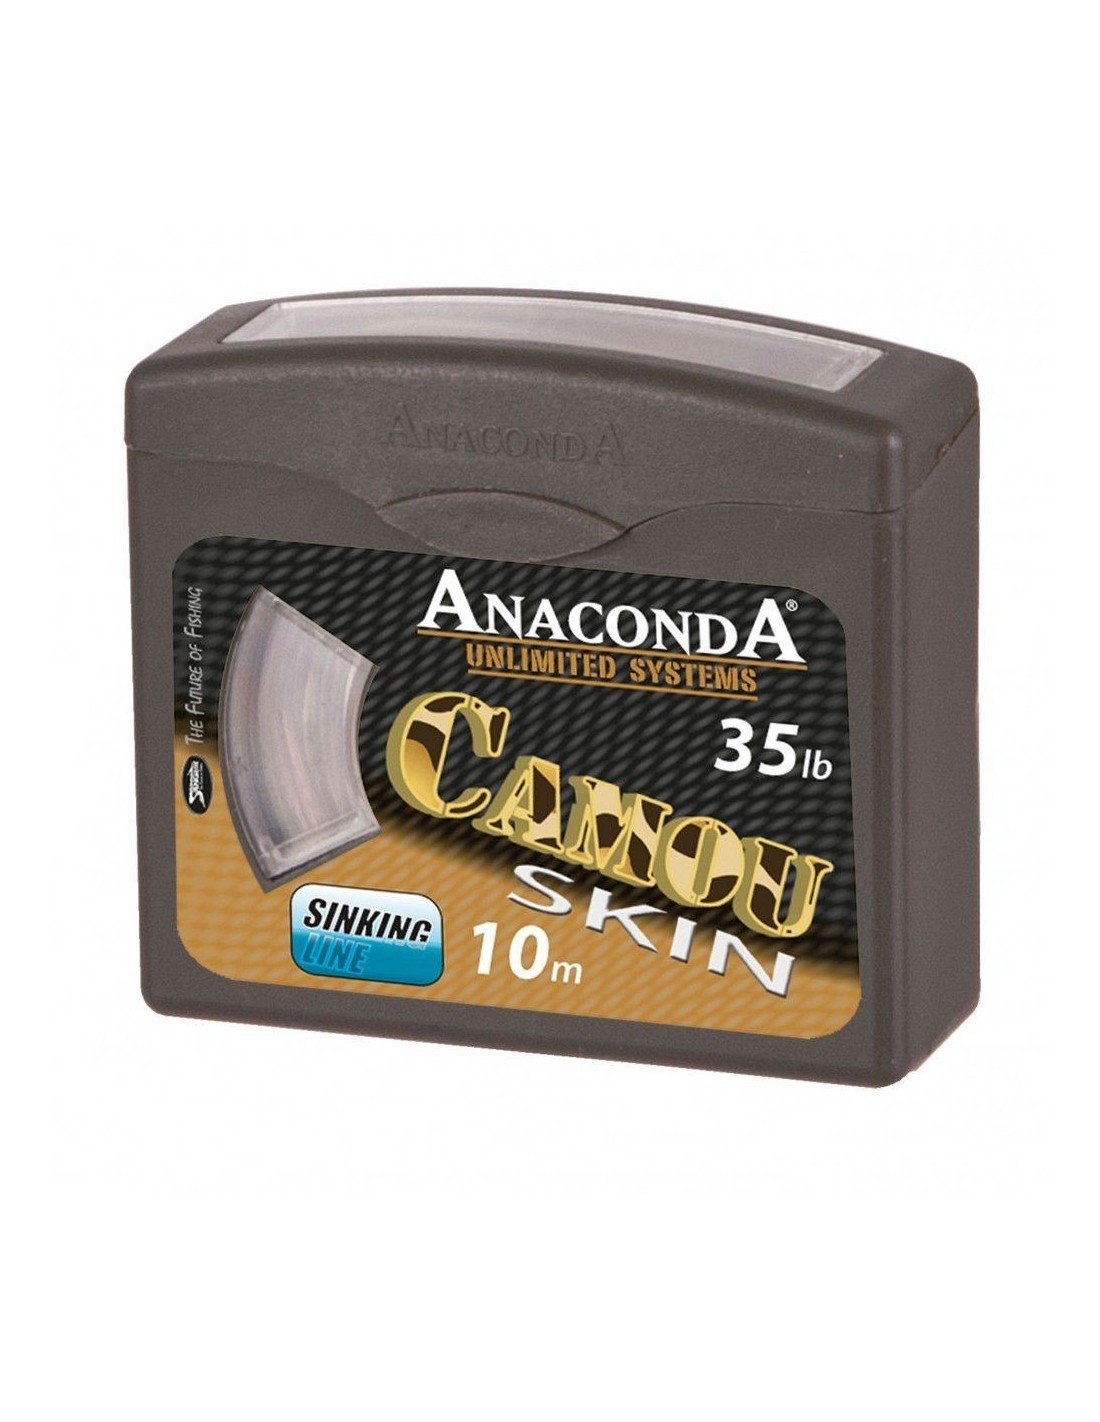 Anaconda Camou Skin 15lb 10m Tippet Material 